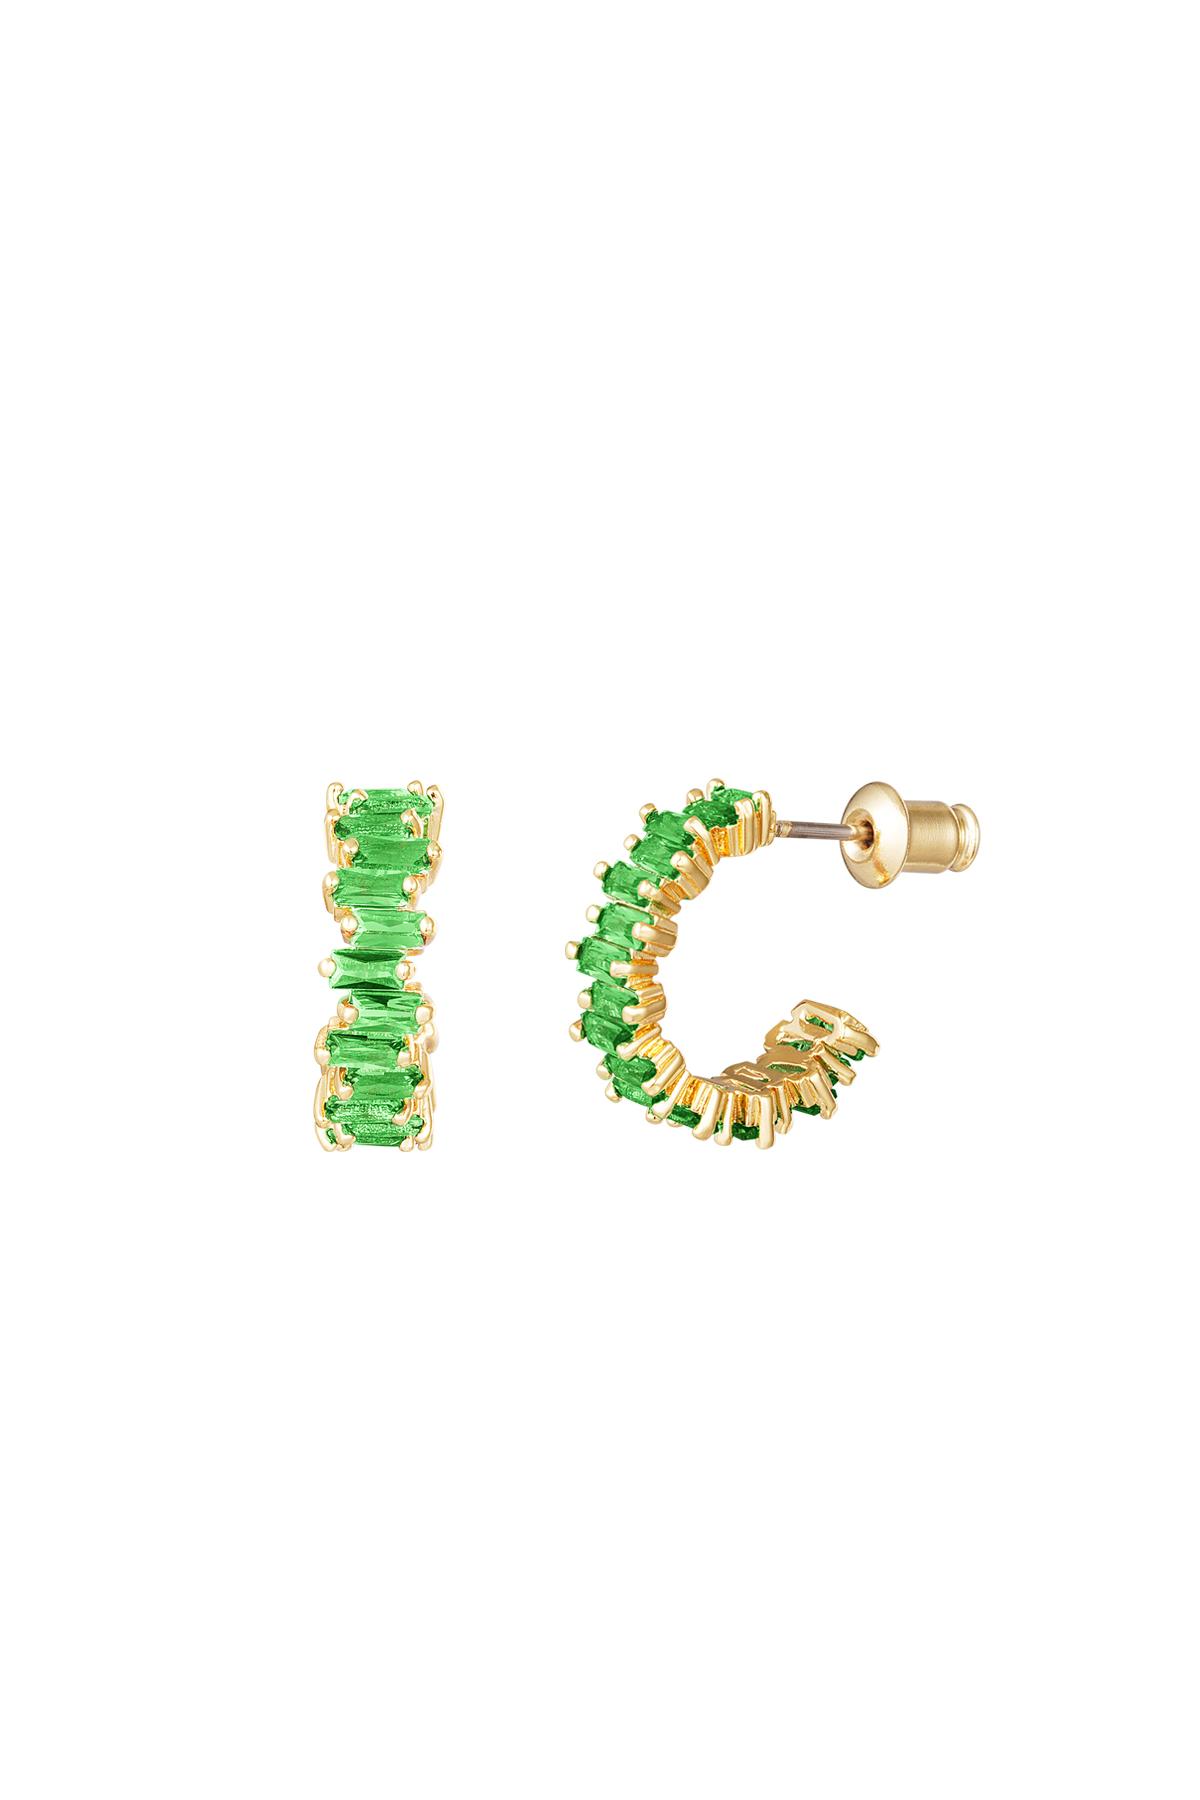 Green & Gold / Earrings zircon stone Green & Gold Copper Picture4